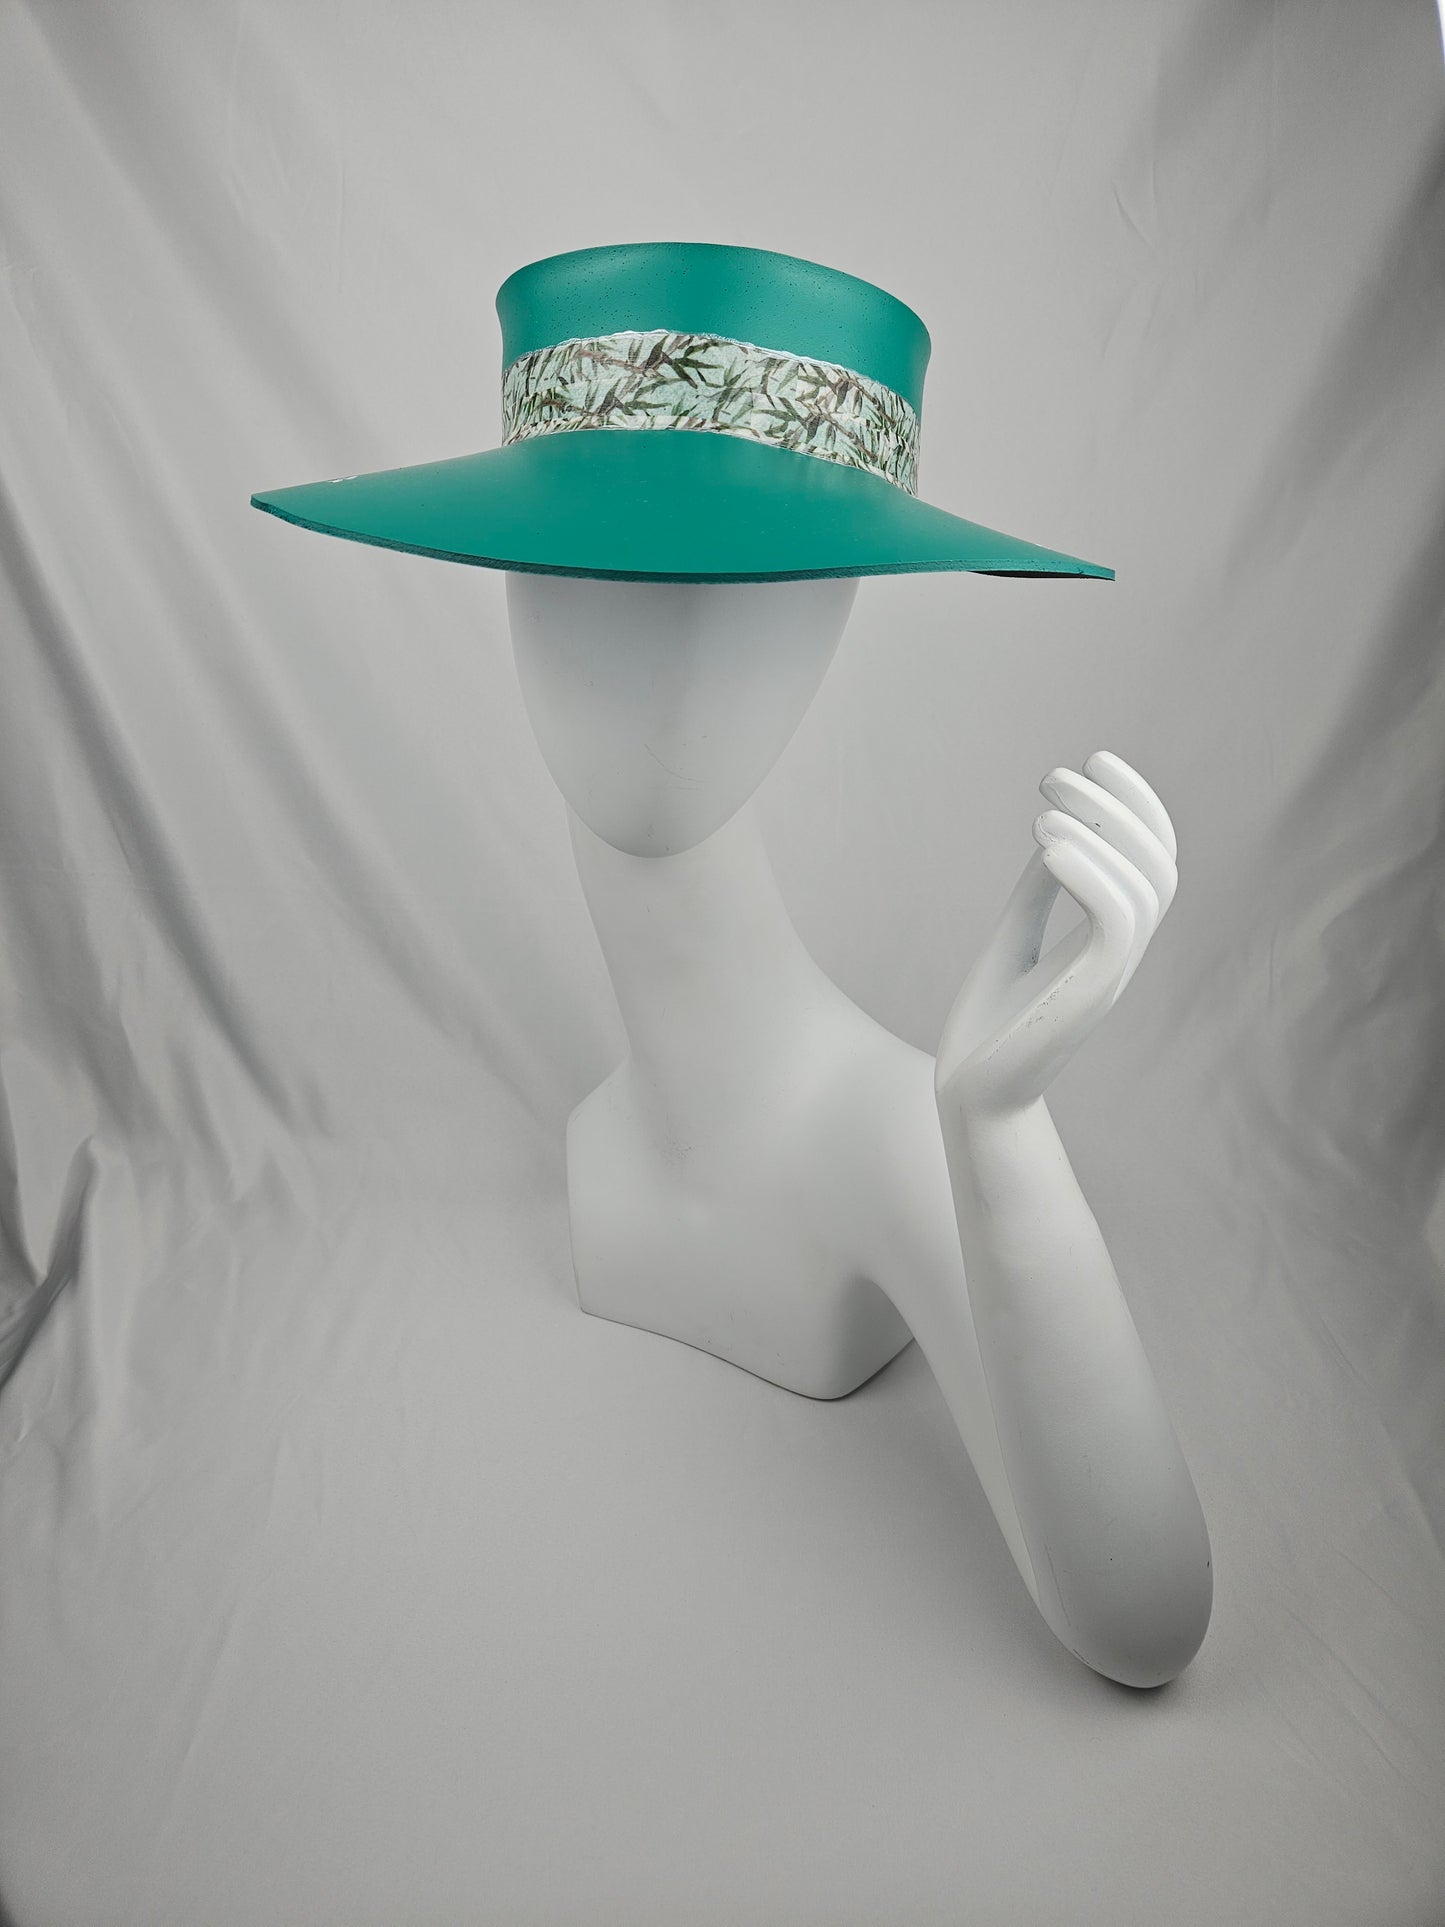 Trending Emerald Green Audrey Foam Sun Visor Hat with Elegant Leaf Themed Band and Handpainted Floral Motif: Church, Brunch, Derby, Garden, Beach, Pool, Asian, No Headache